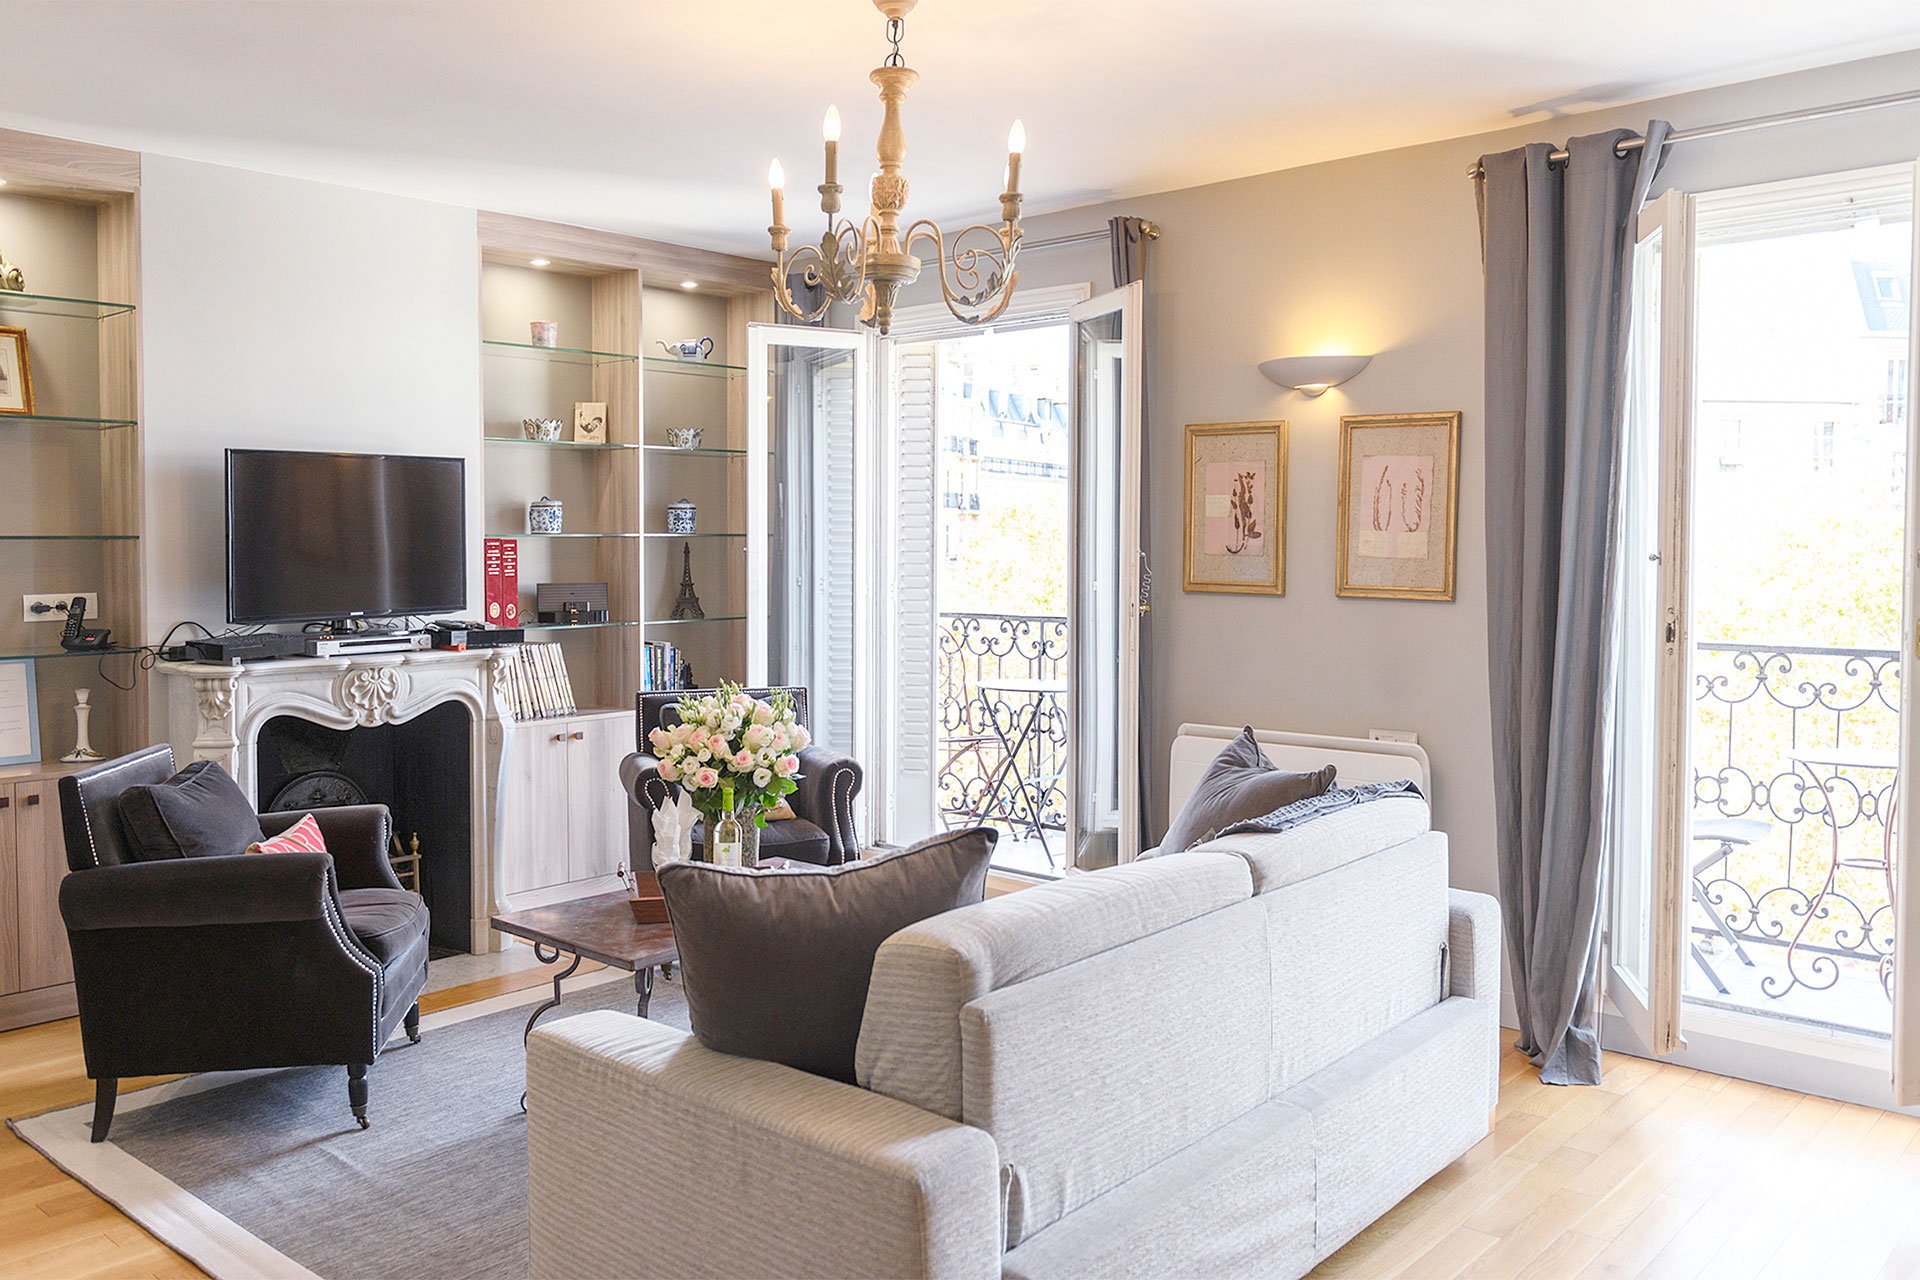 2 Bedroom Luxury Flat in Paris with Eiffel Tower Views - Paris Perfect